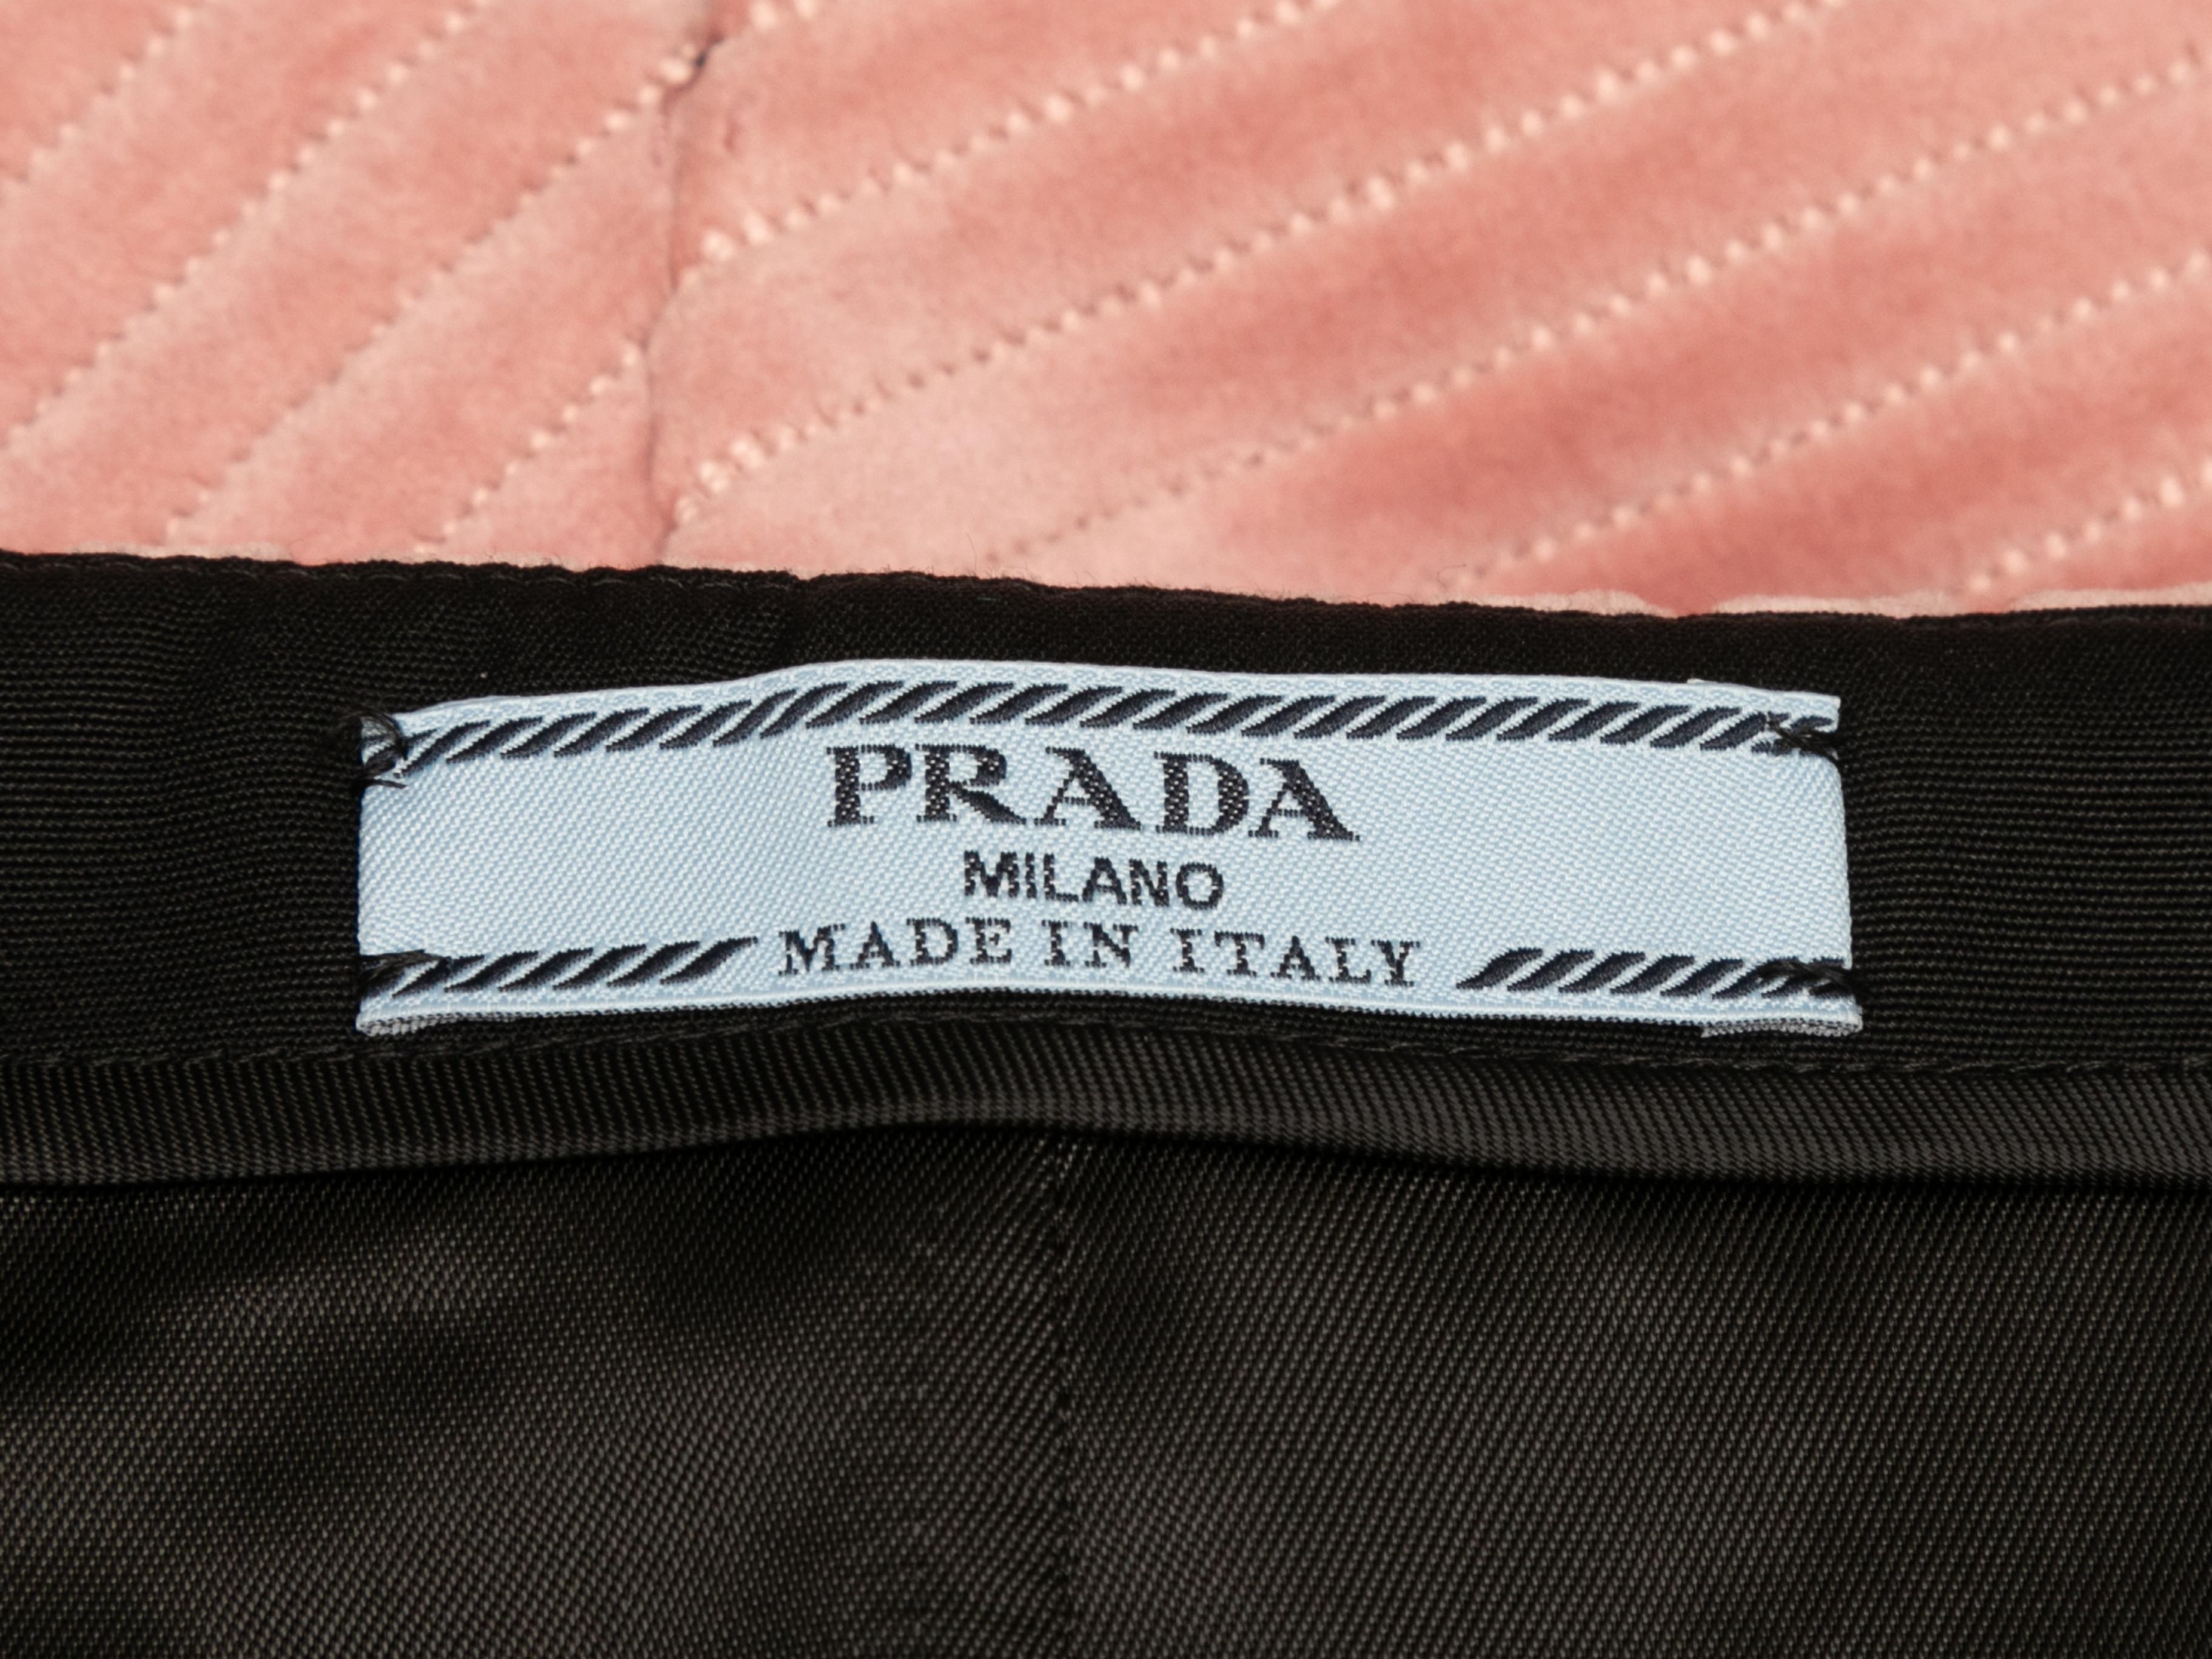 Light pink 2021 velvet A-line skirt by Prada. Zip closure at side. 32